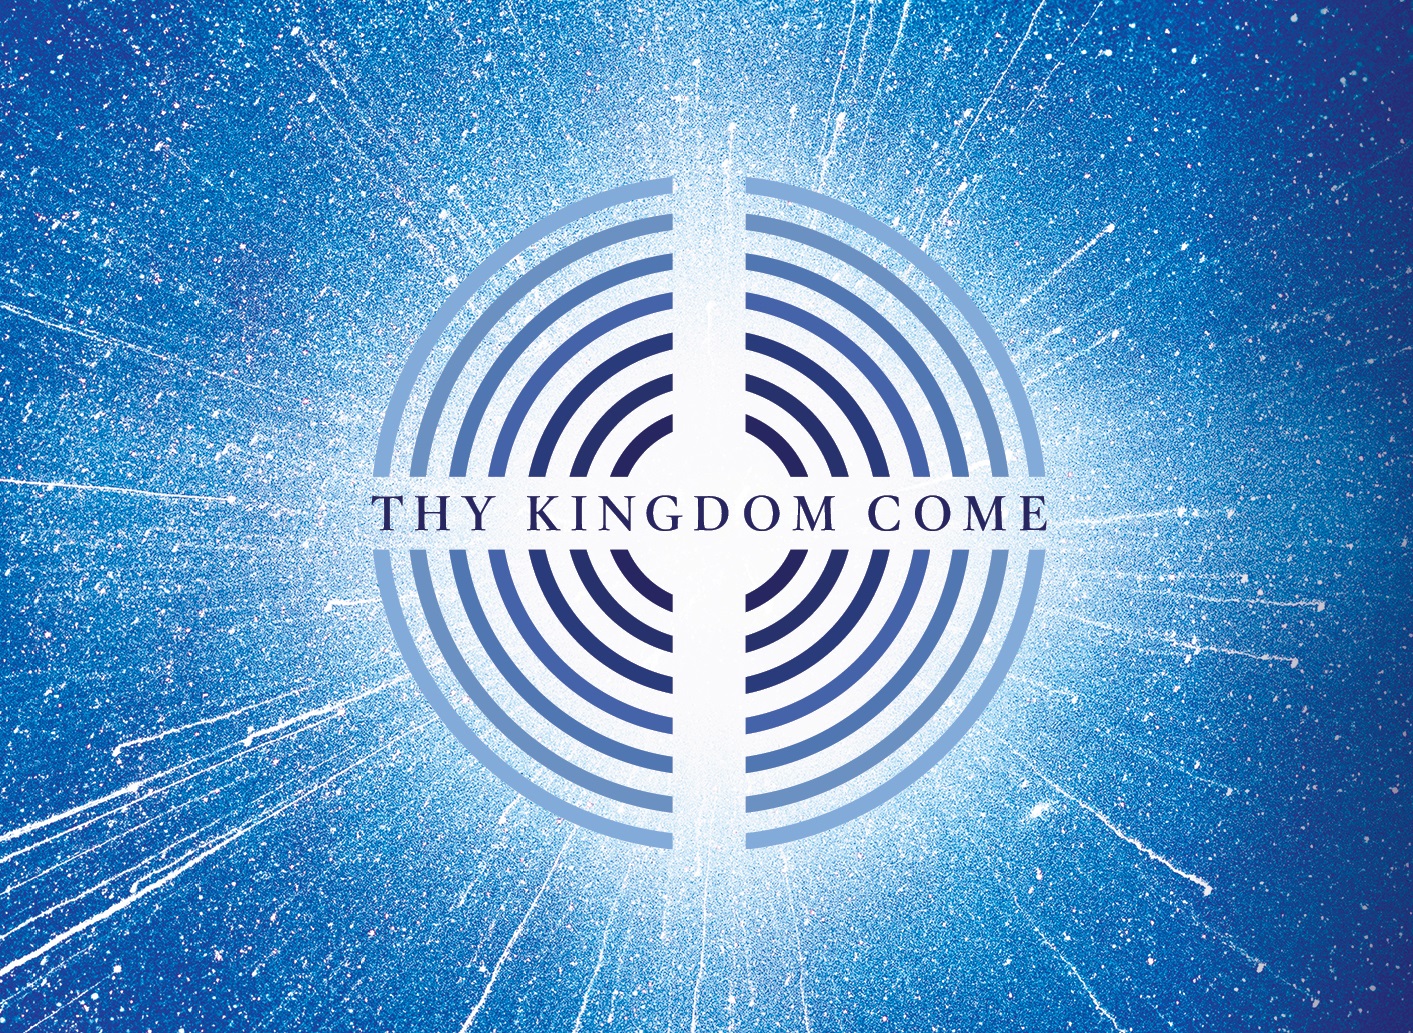 Thy Kingdom Come logo 2020